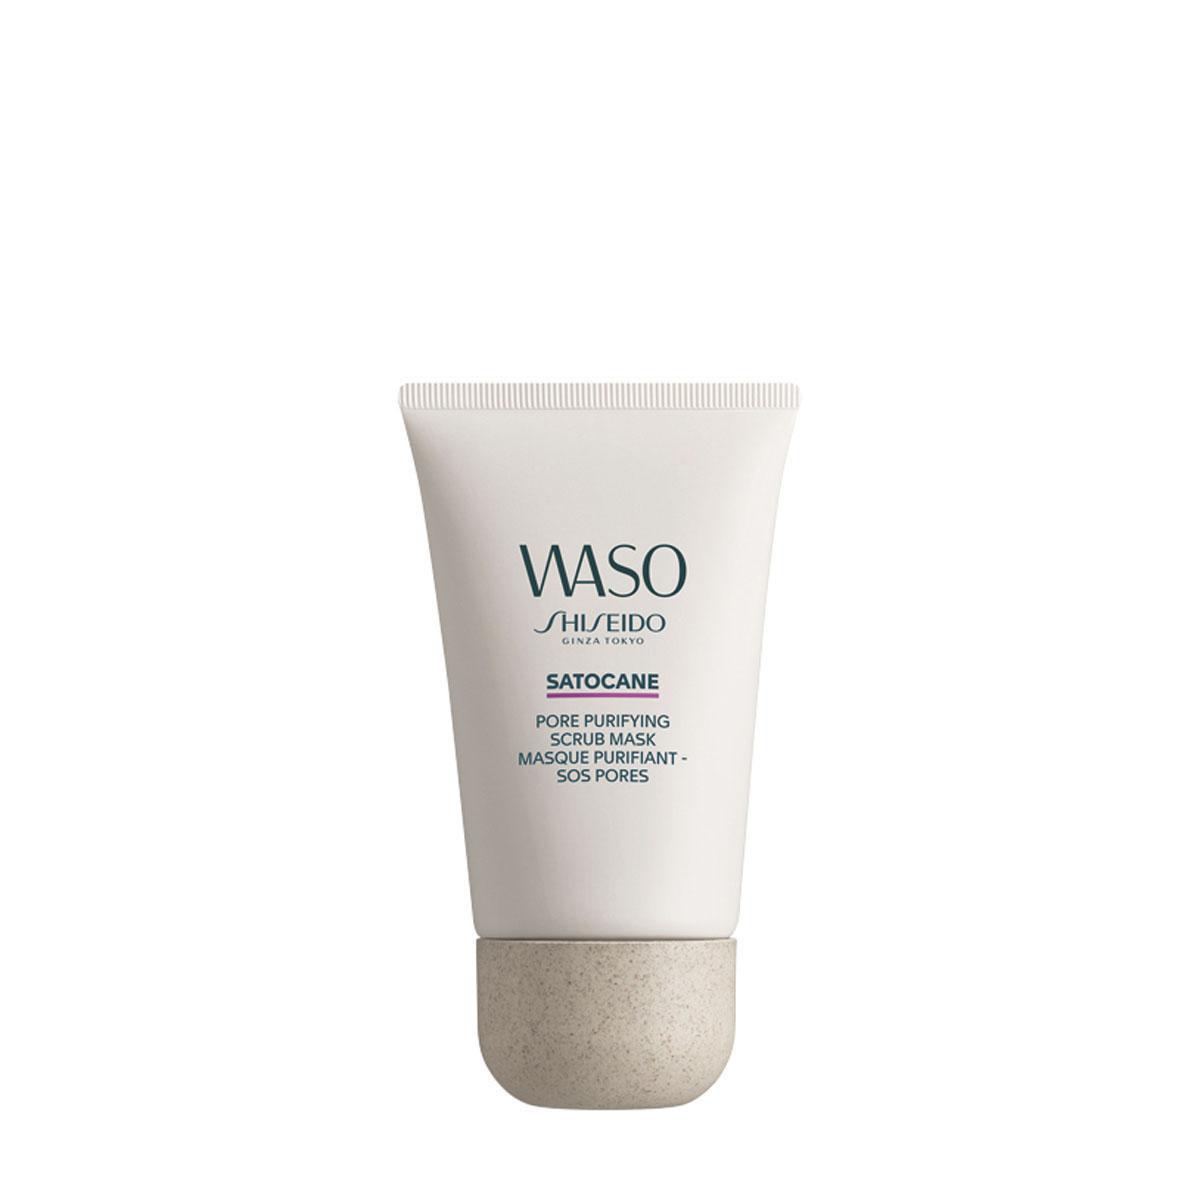 Poriën reinigend masker 'Waso' met suikerriet (38 euro), Shiseido, beschikbaar in juli, shiseido.com